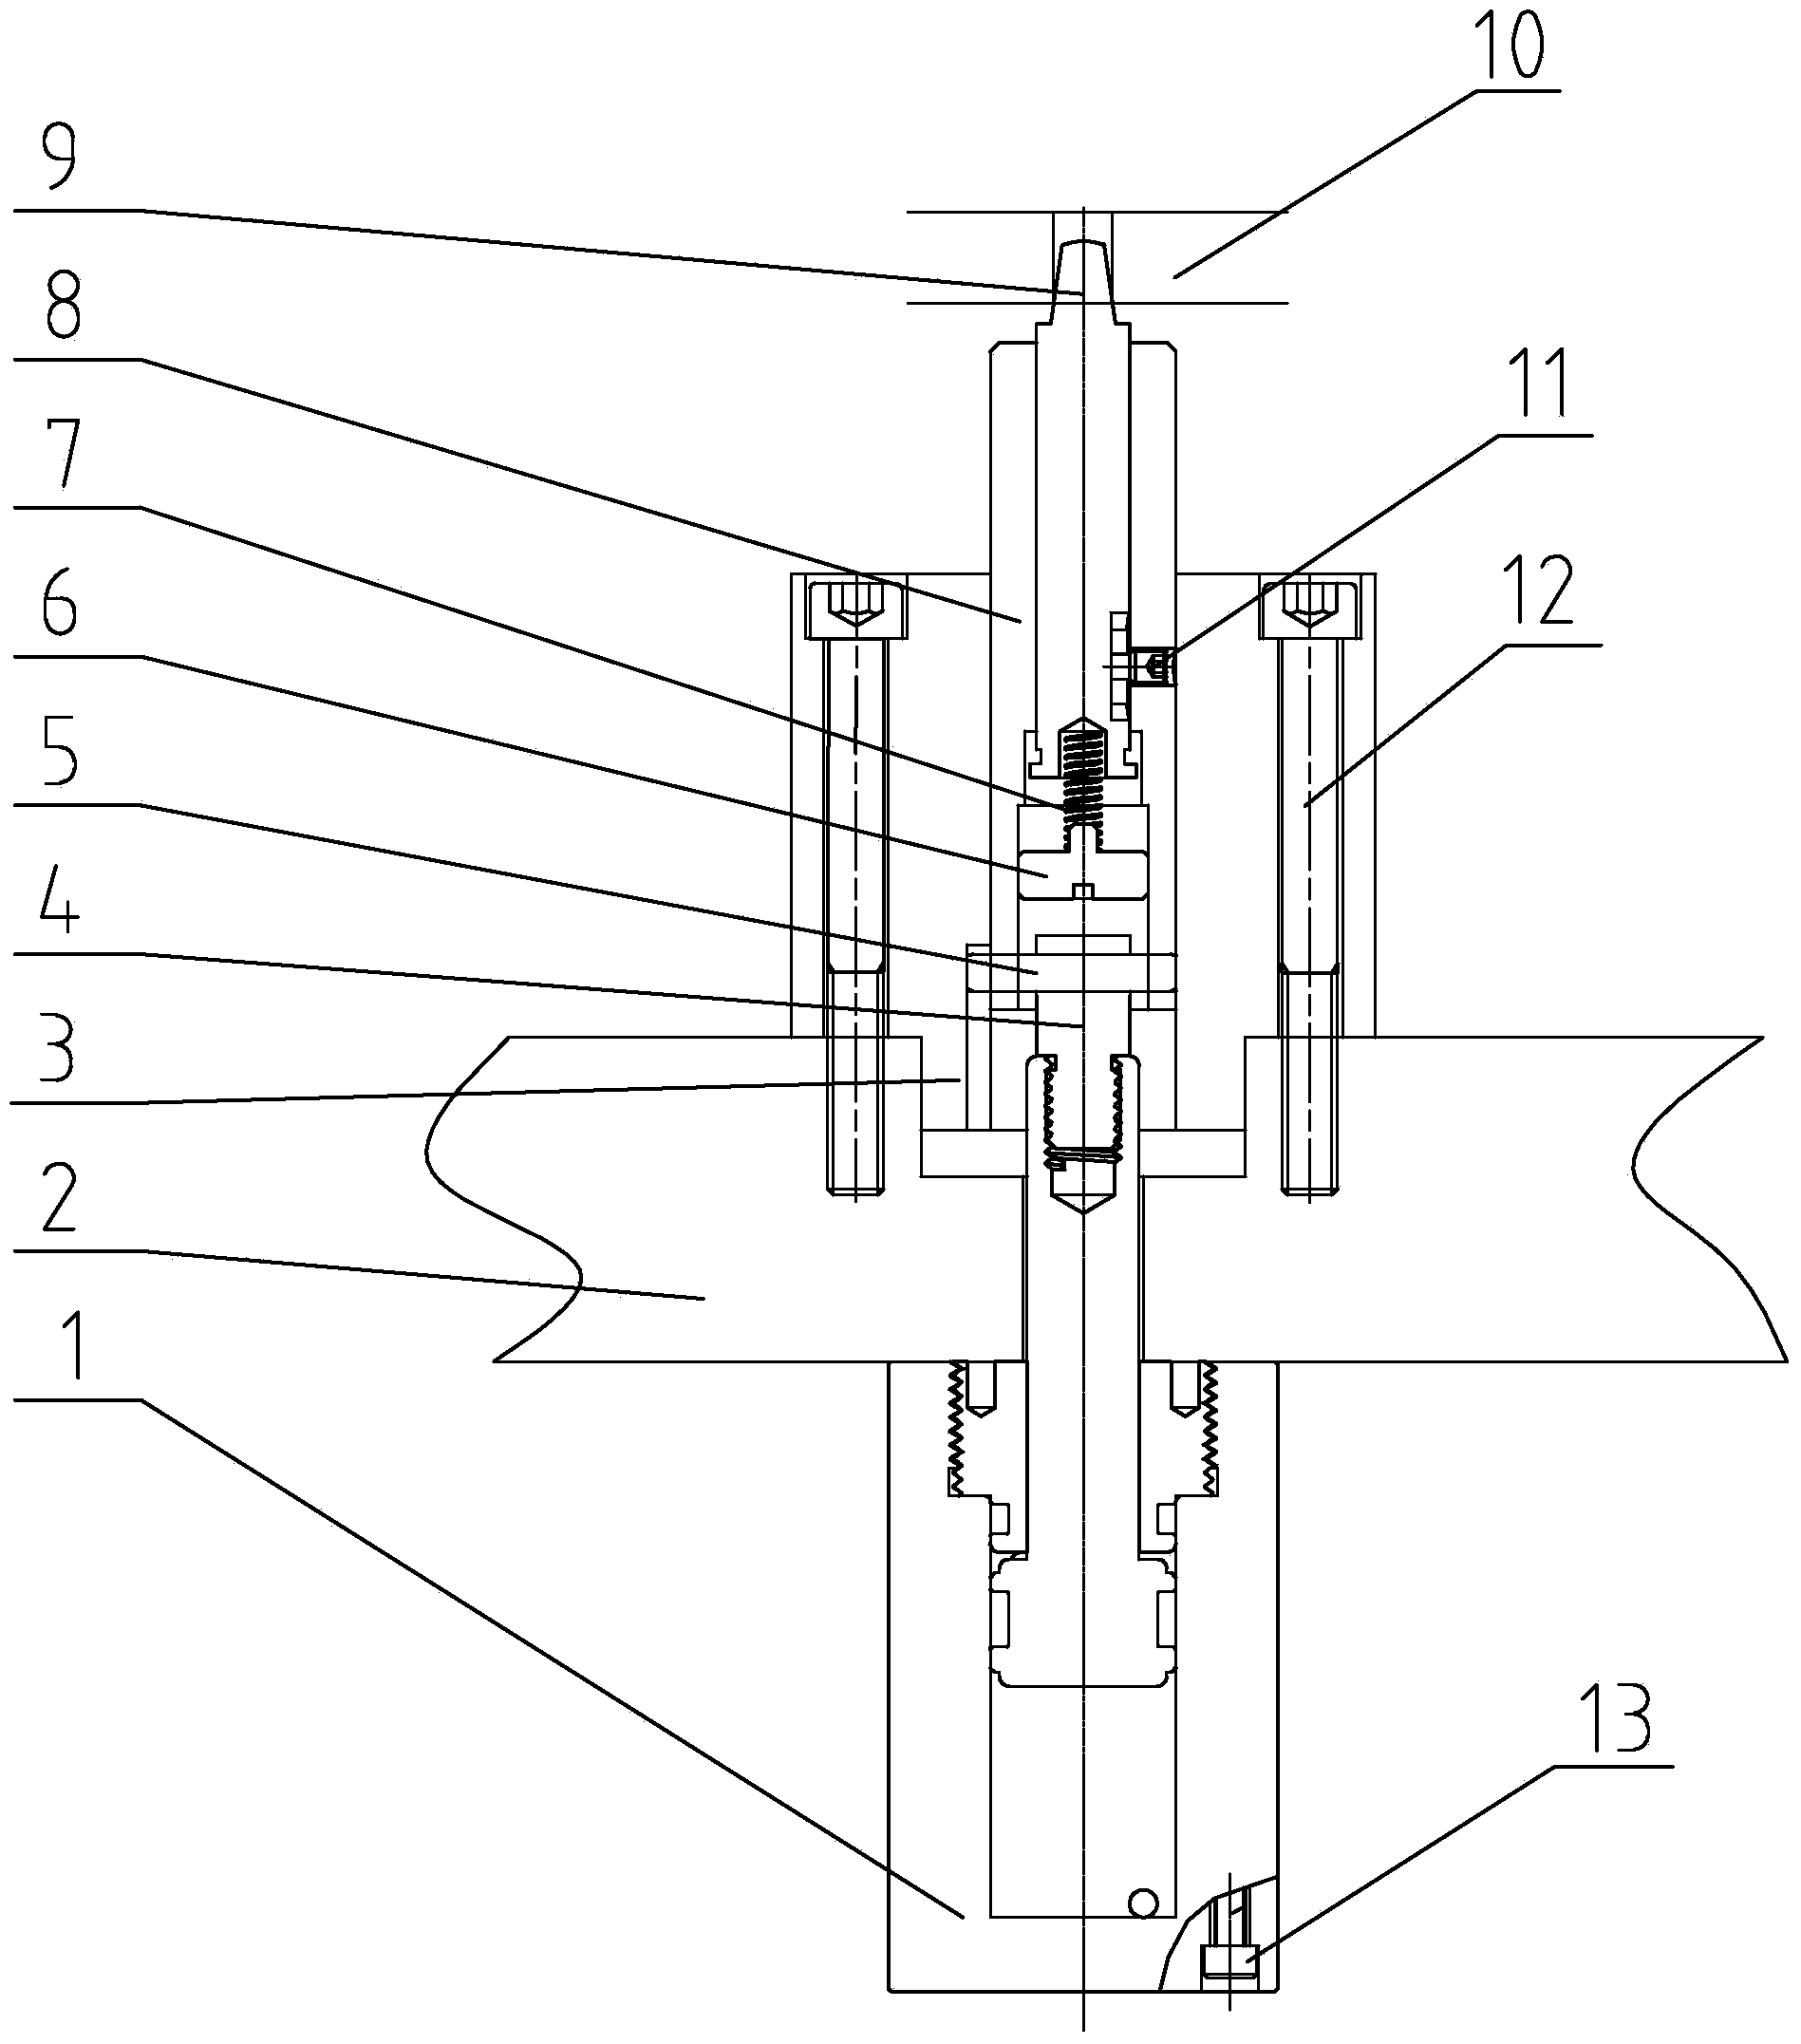 Spring pin telescoping mechanism